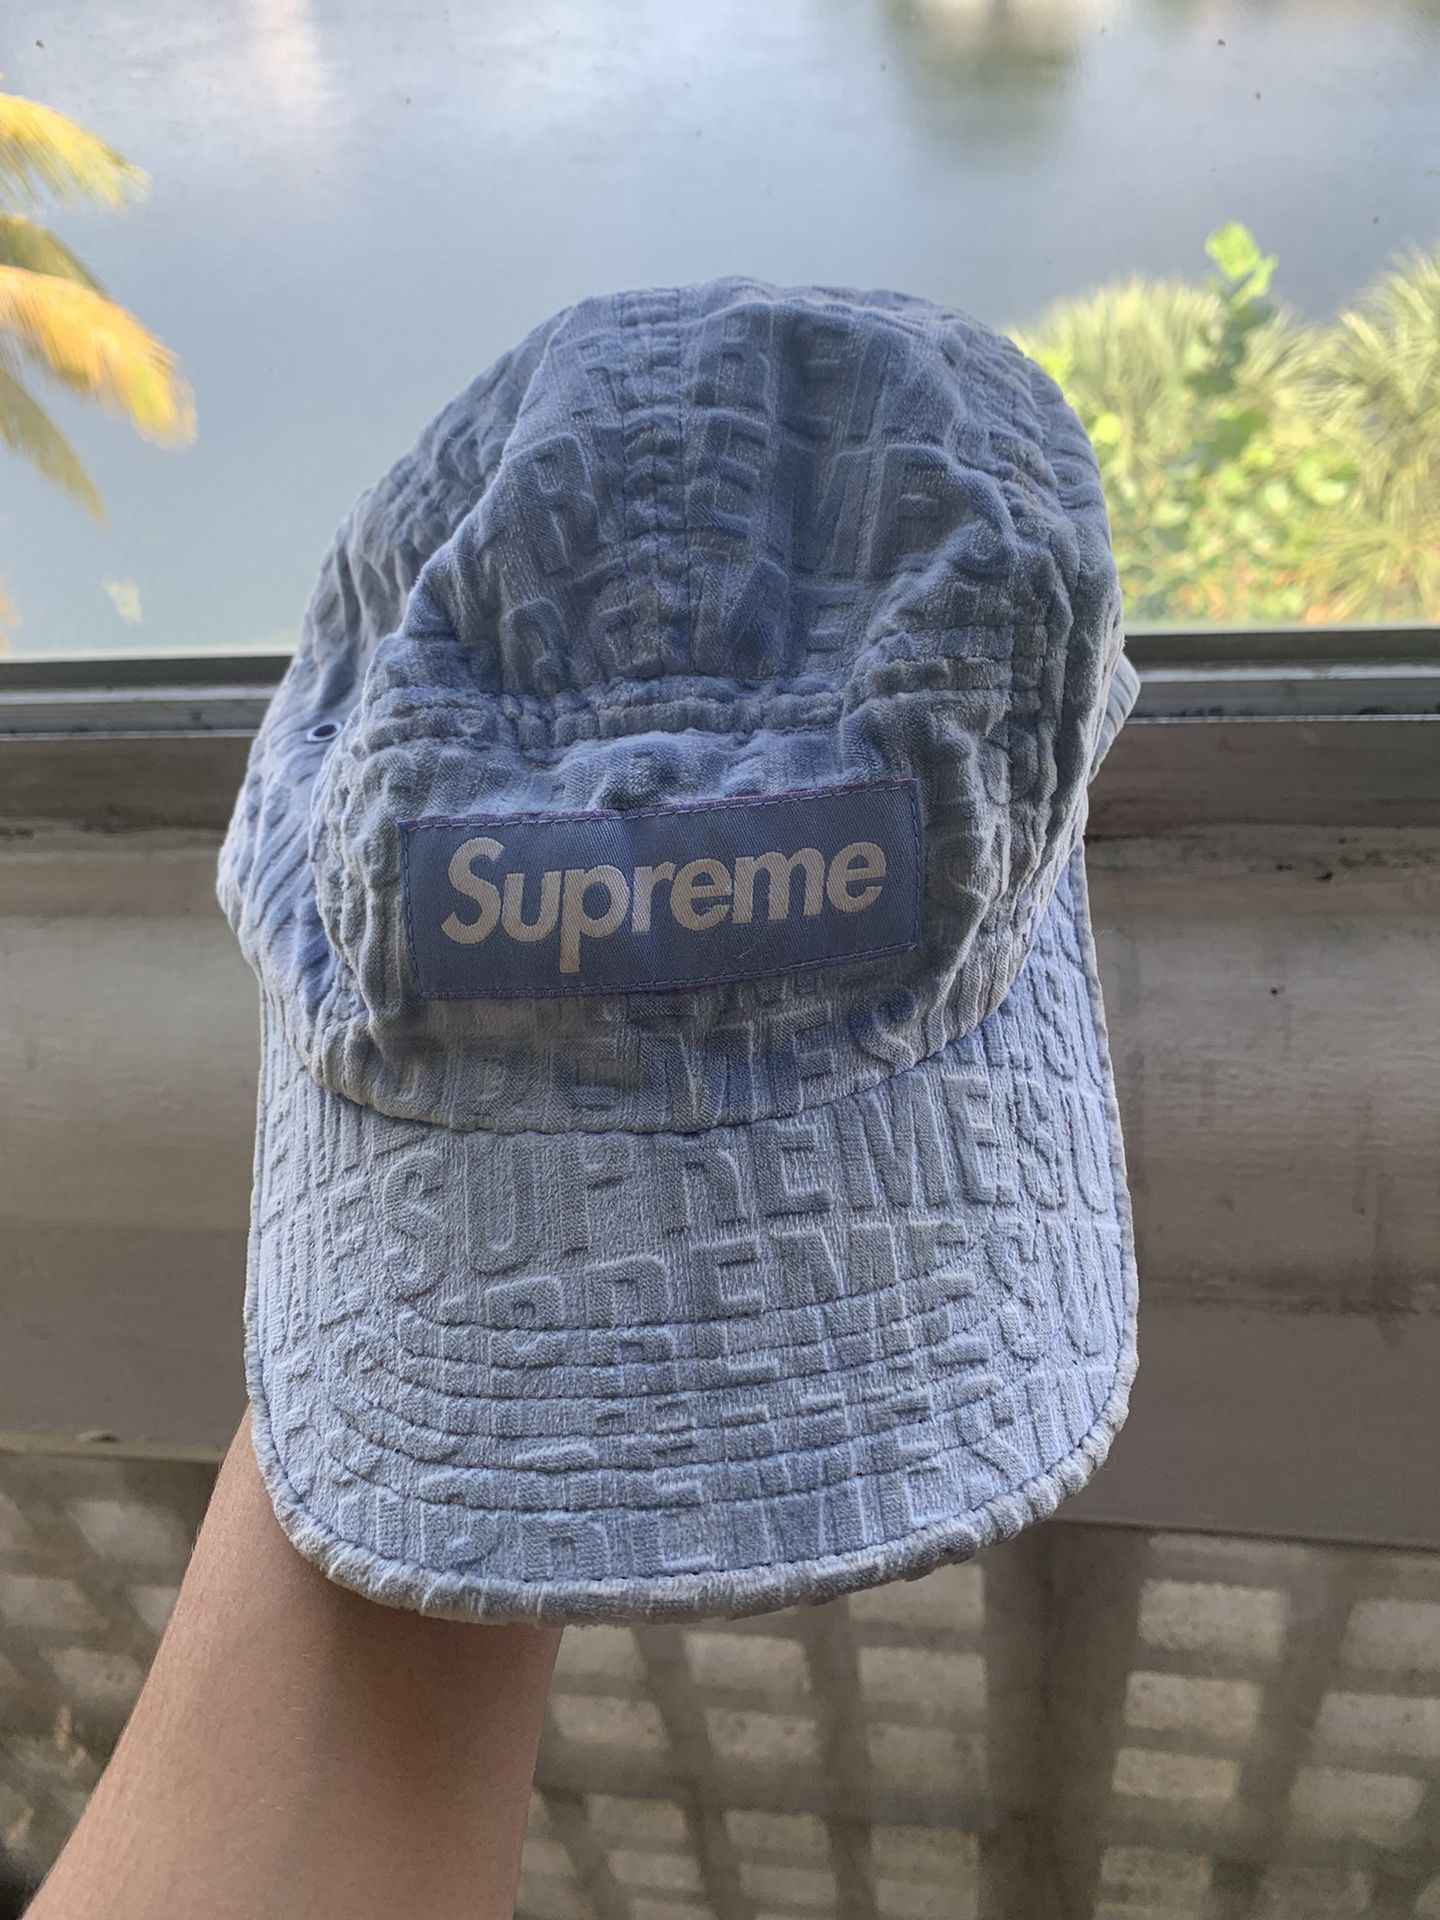 supreme cap blue